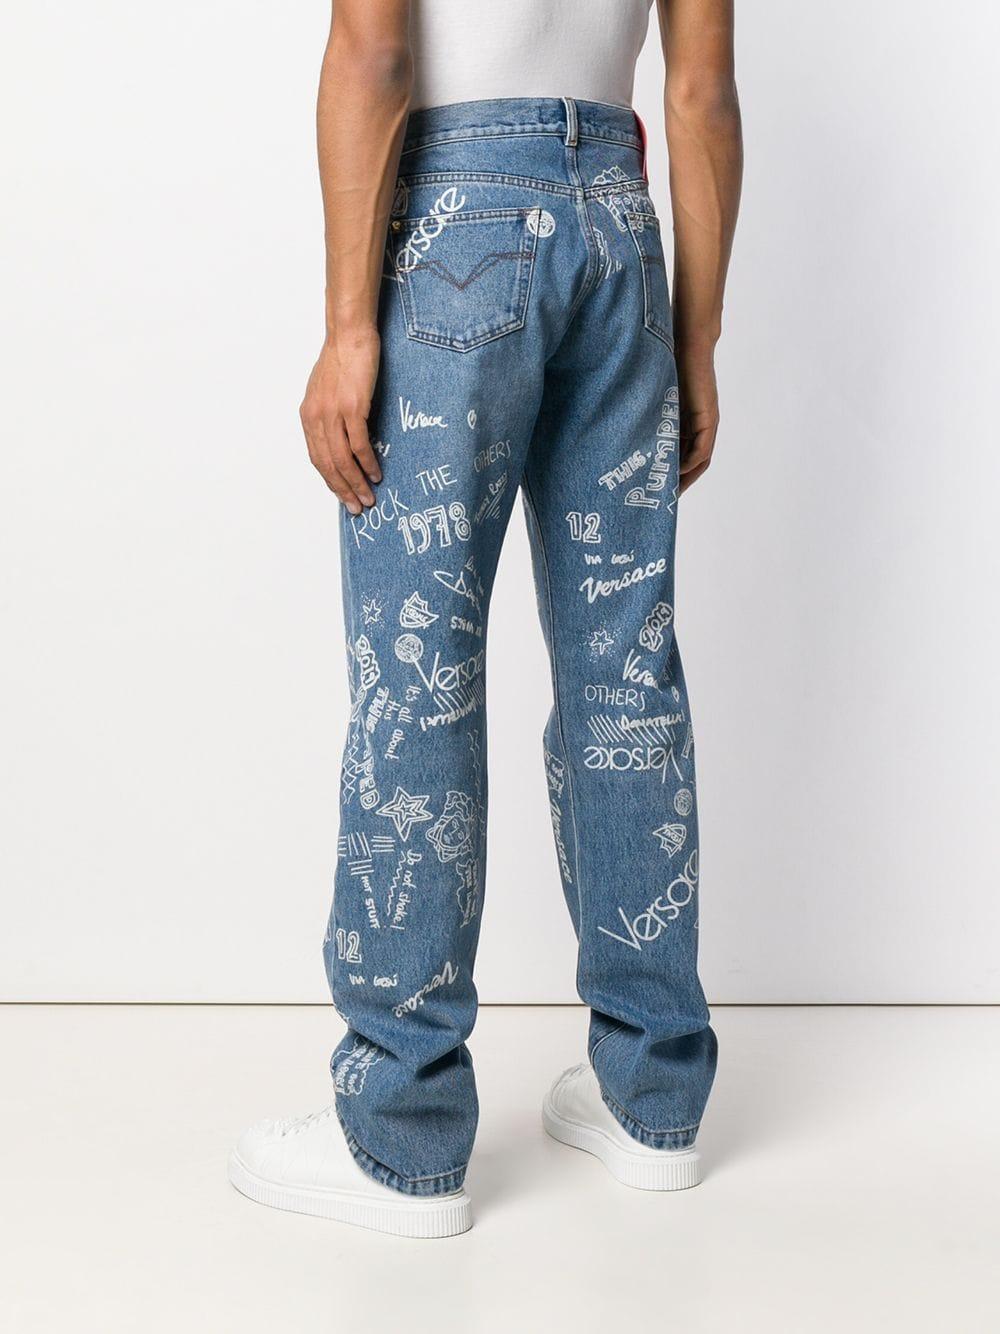 donatella jeans